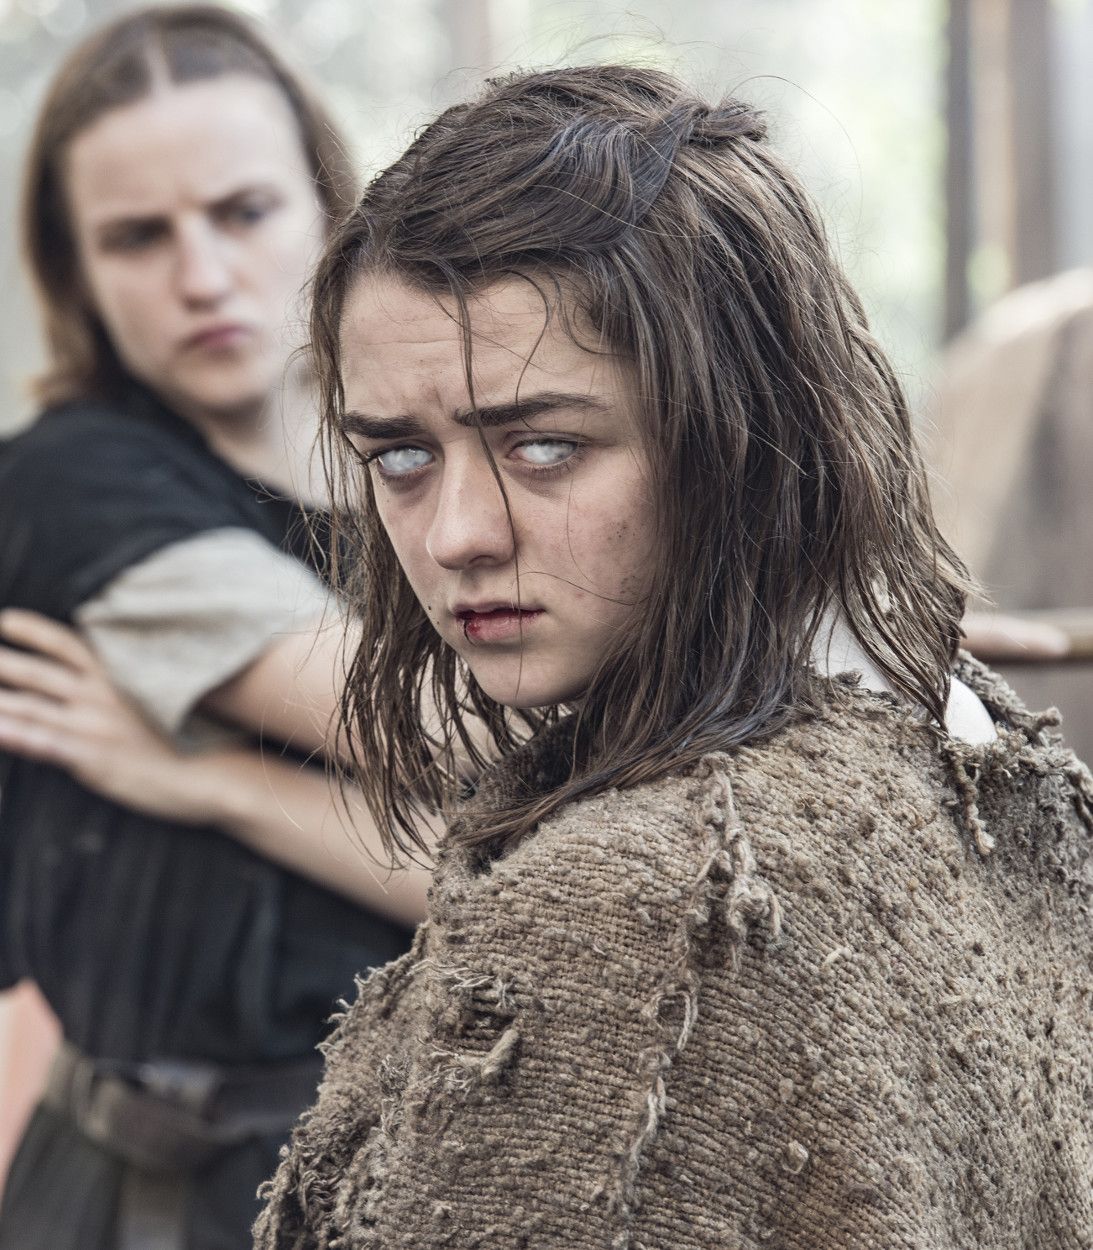 Maisie Williams As Arya Stark In Game Of Thrones